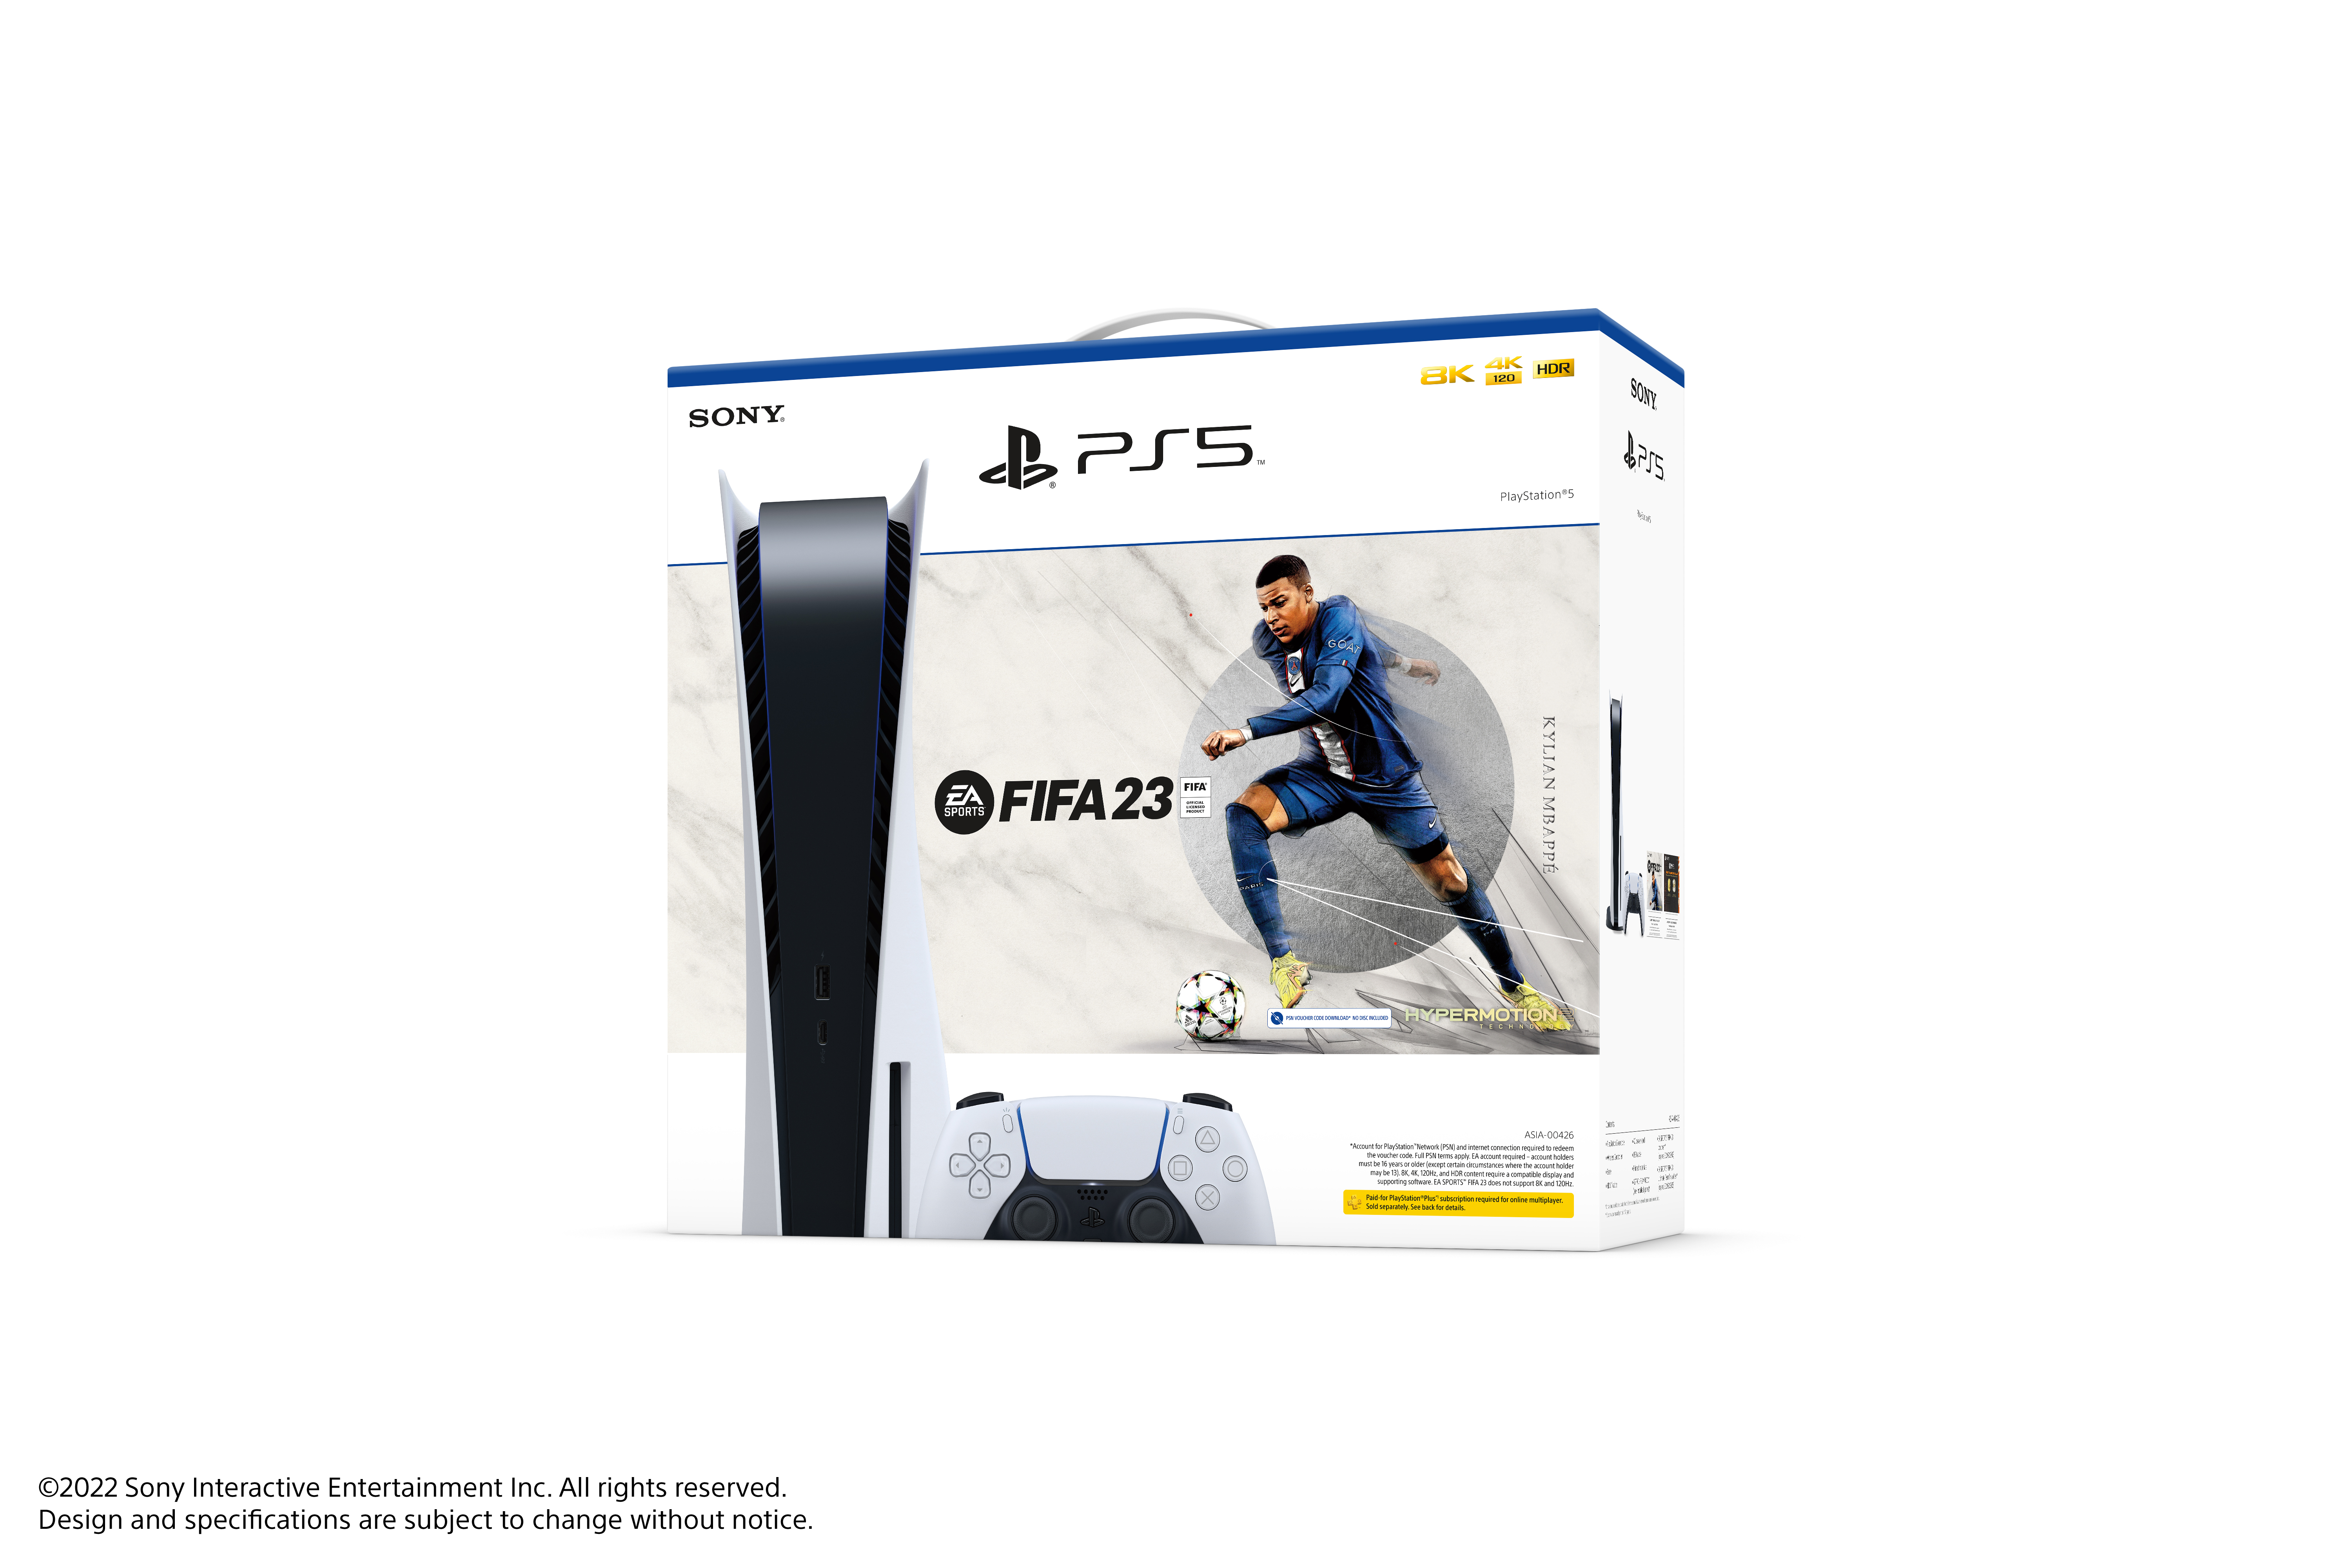 Sony PlayStation ประกาศวางจำหน่ายชุดเครื่องเกมบันเดิล  PlayStation®5 EA SPORTS™ FIFA 23 ราคา 20,790 บาท ในวันที่ 30 กันยายนนี้